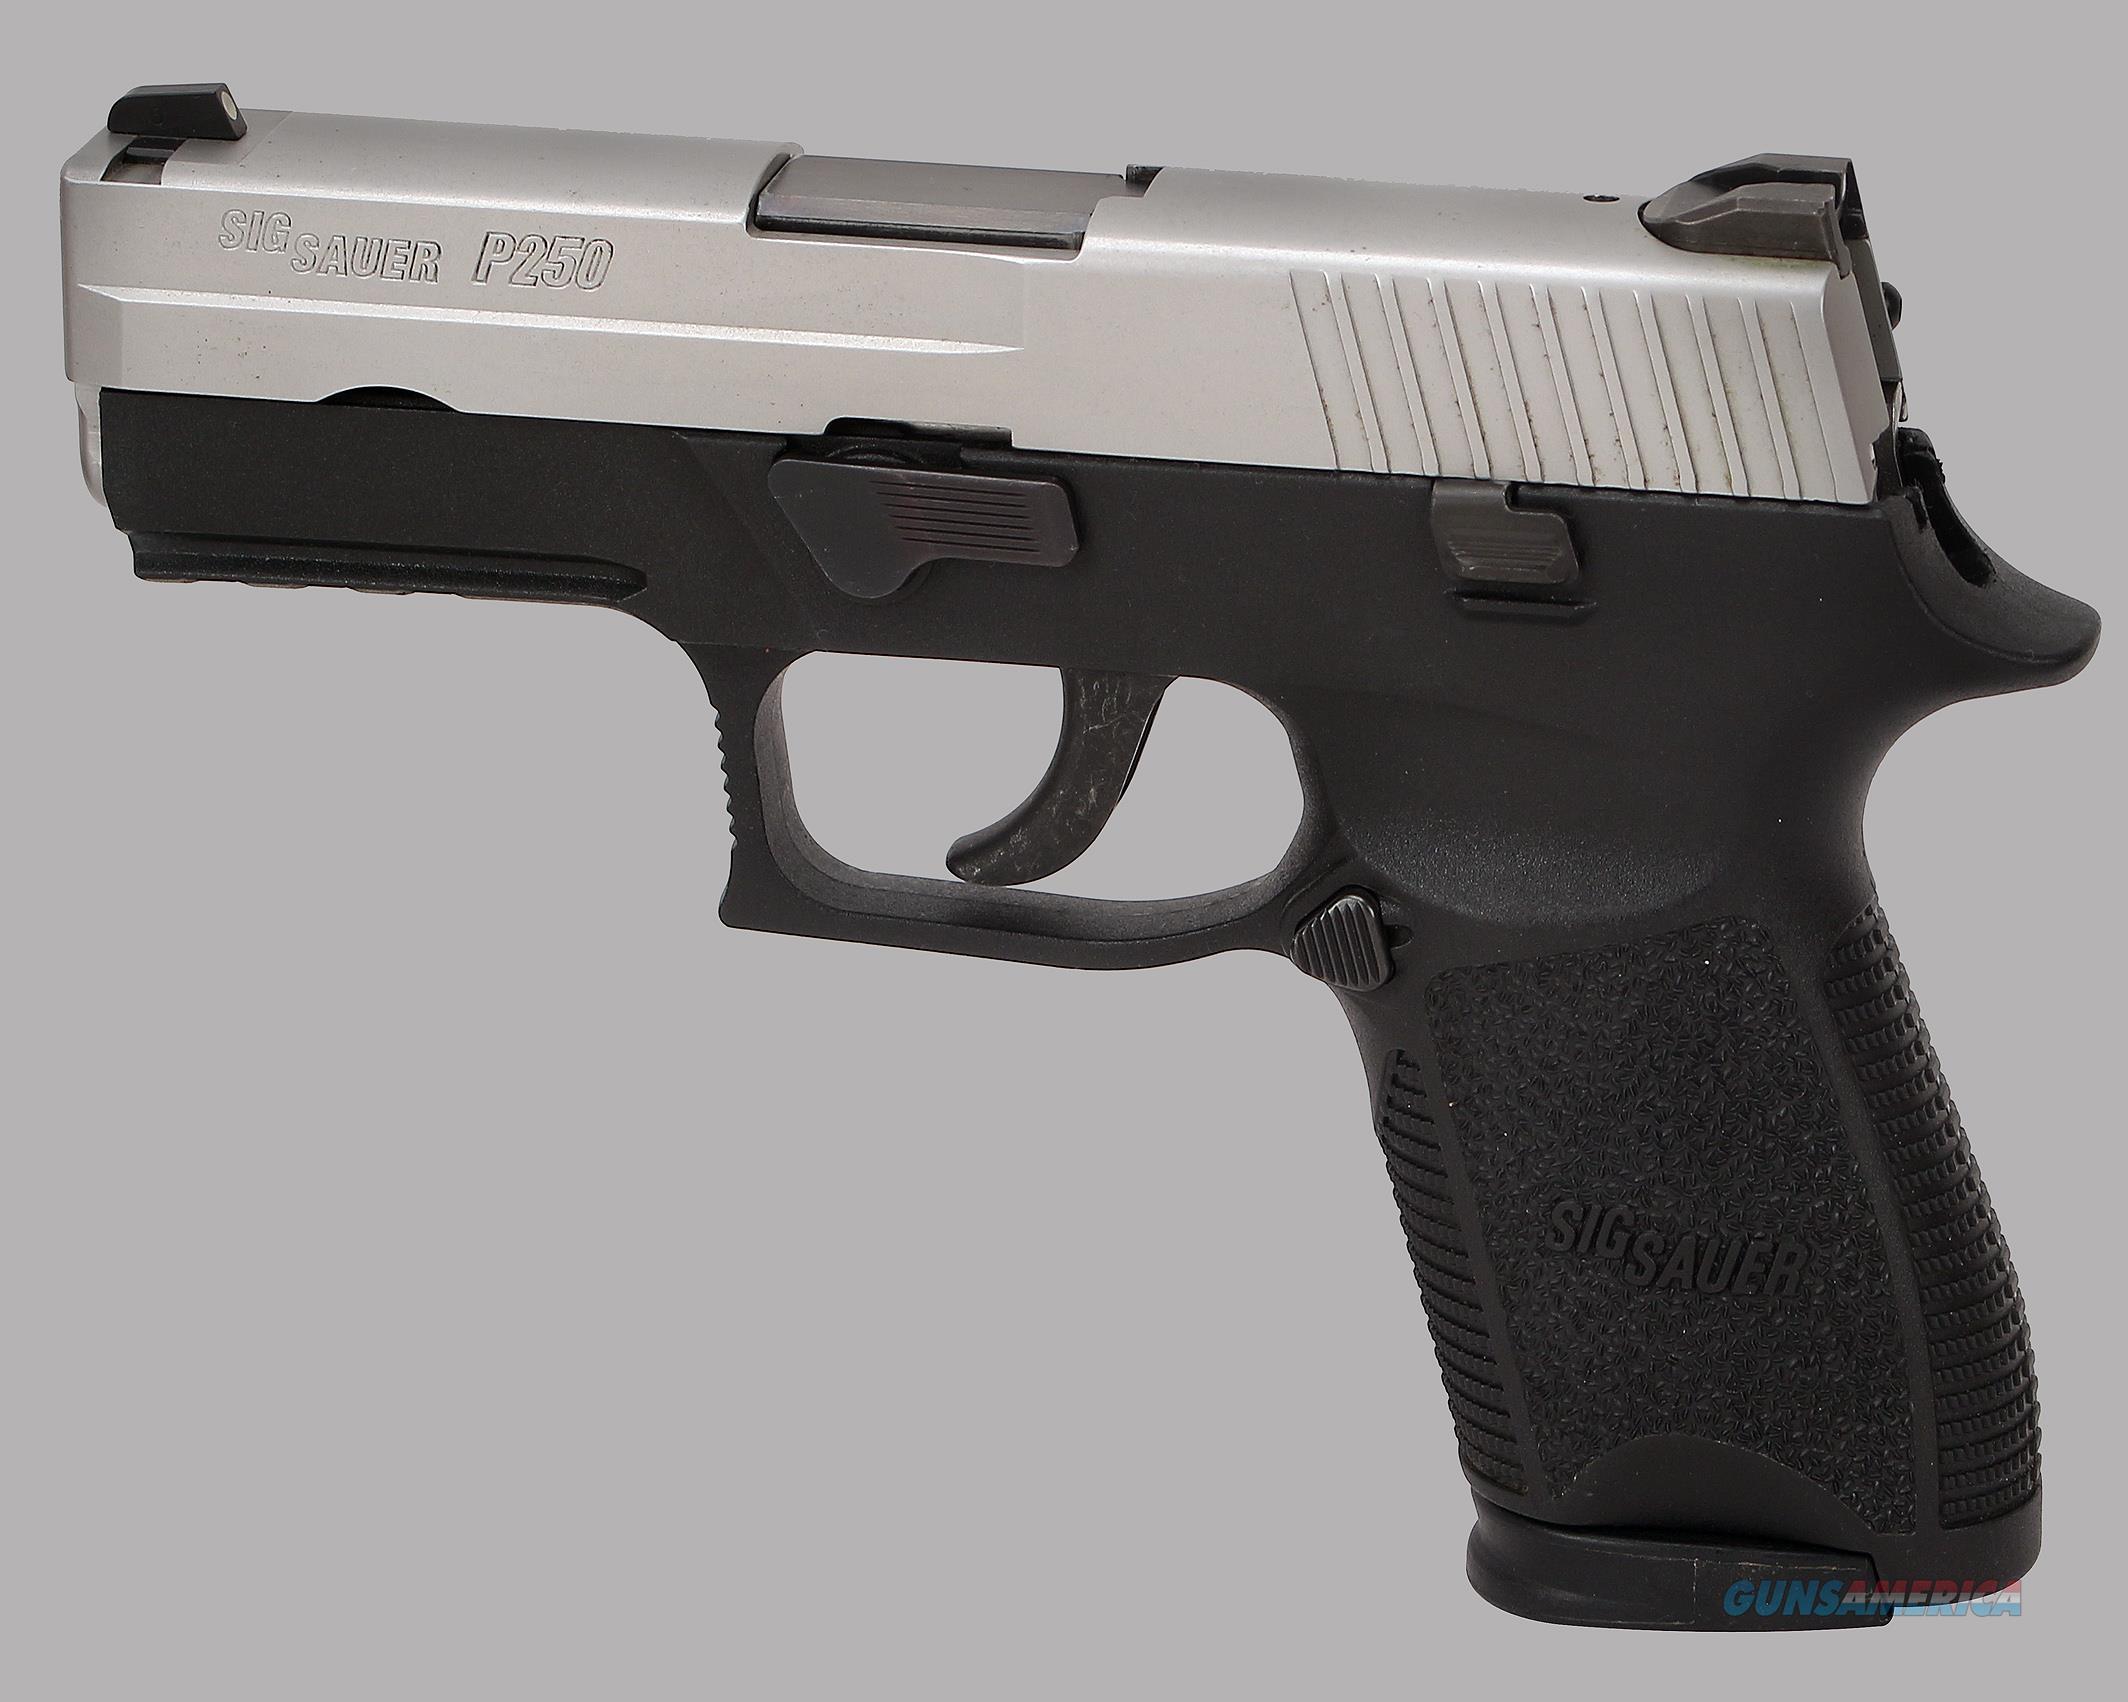  Sig Sauer 9mm  P250 Pistol for sale